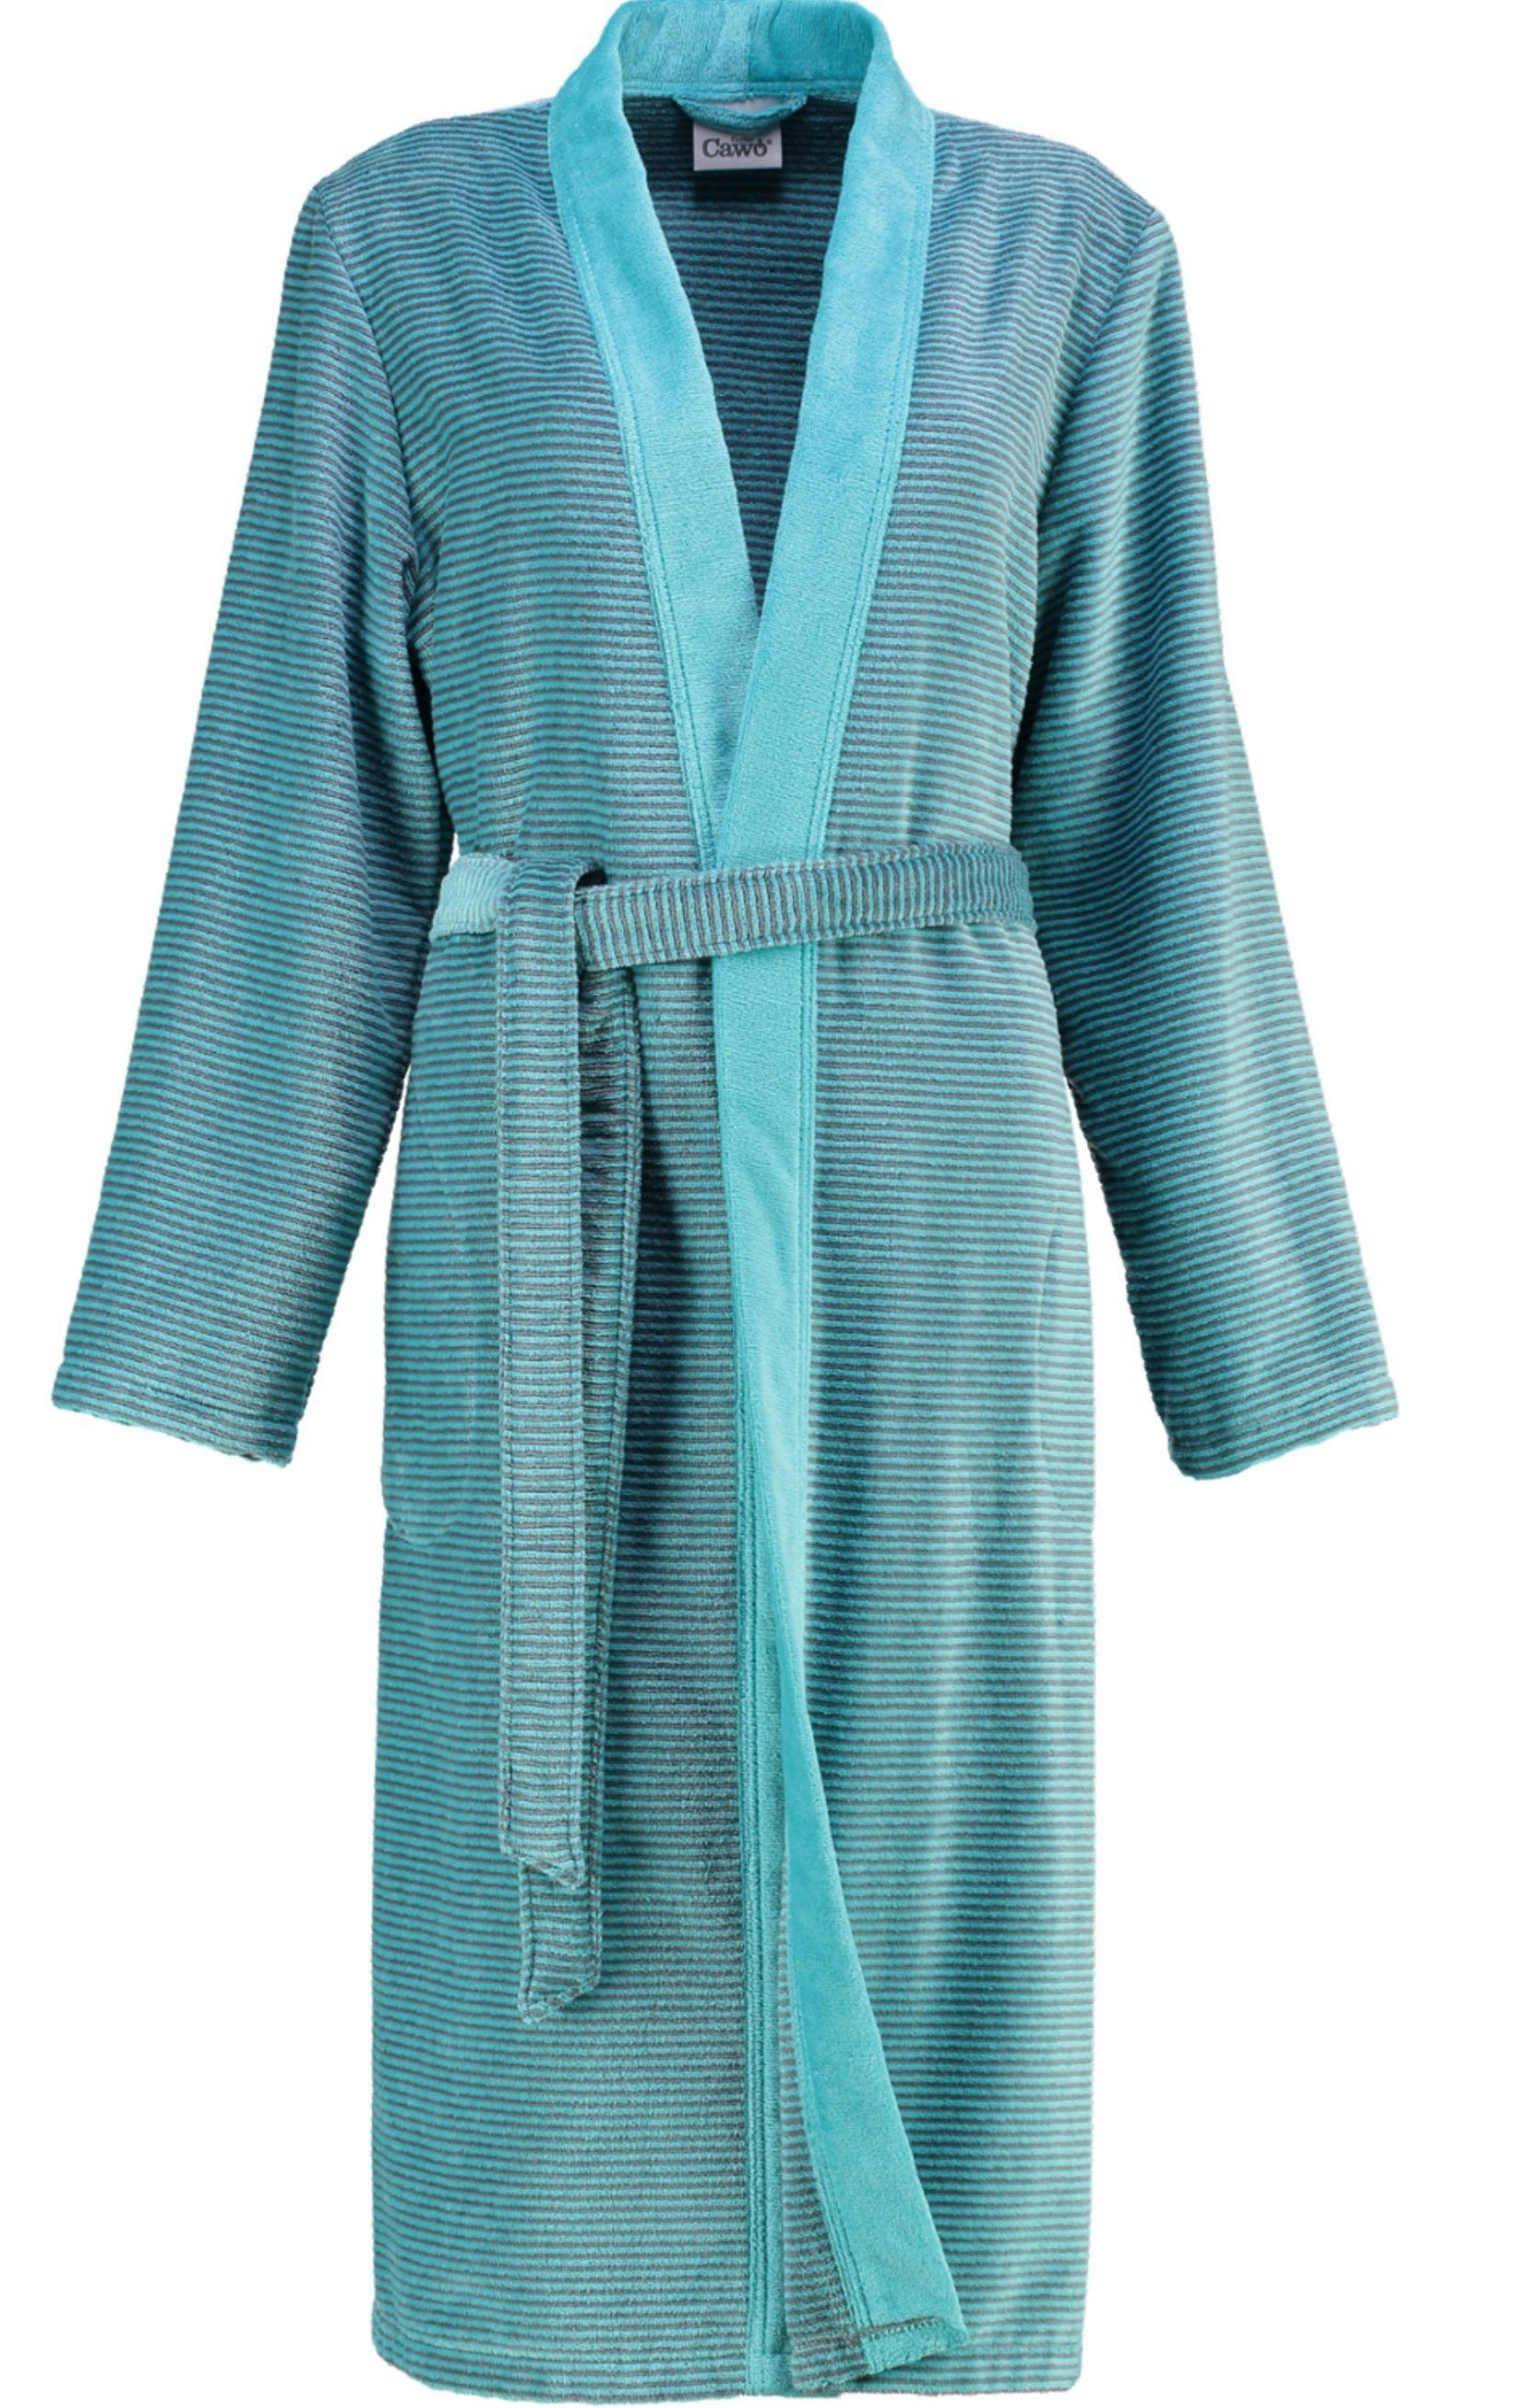 Cawö Kimono-Kragen, Gürtel, Baumwolle, Form Kimono türkis Damenbademantel, Langform,